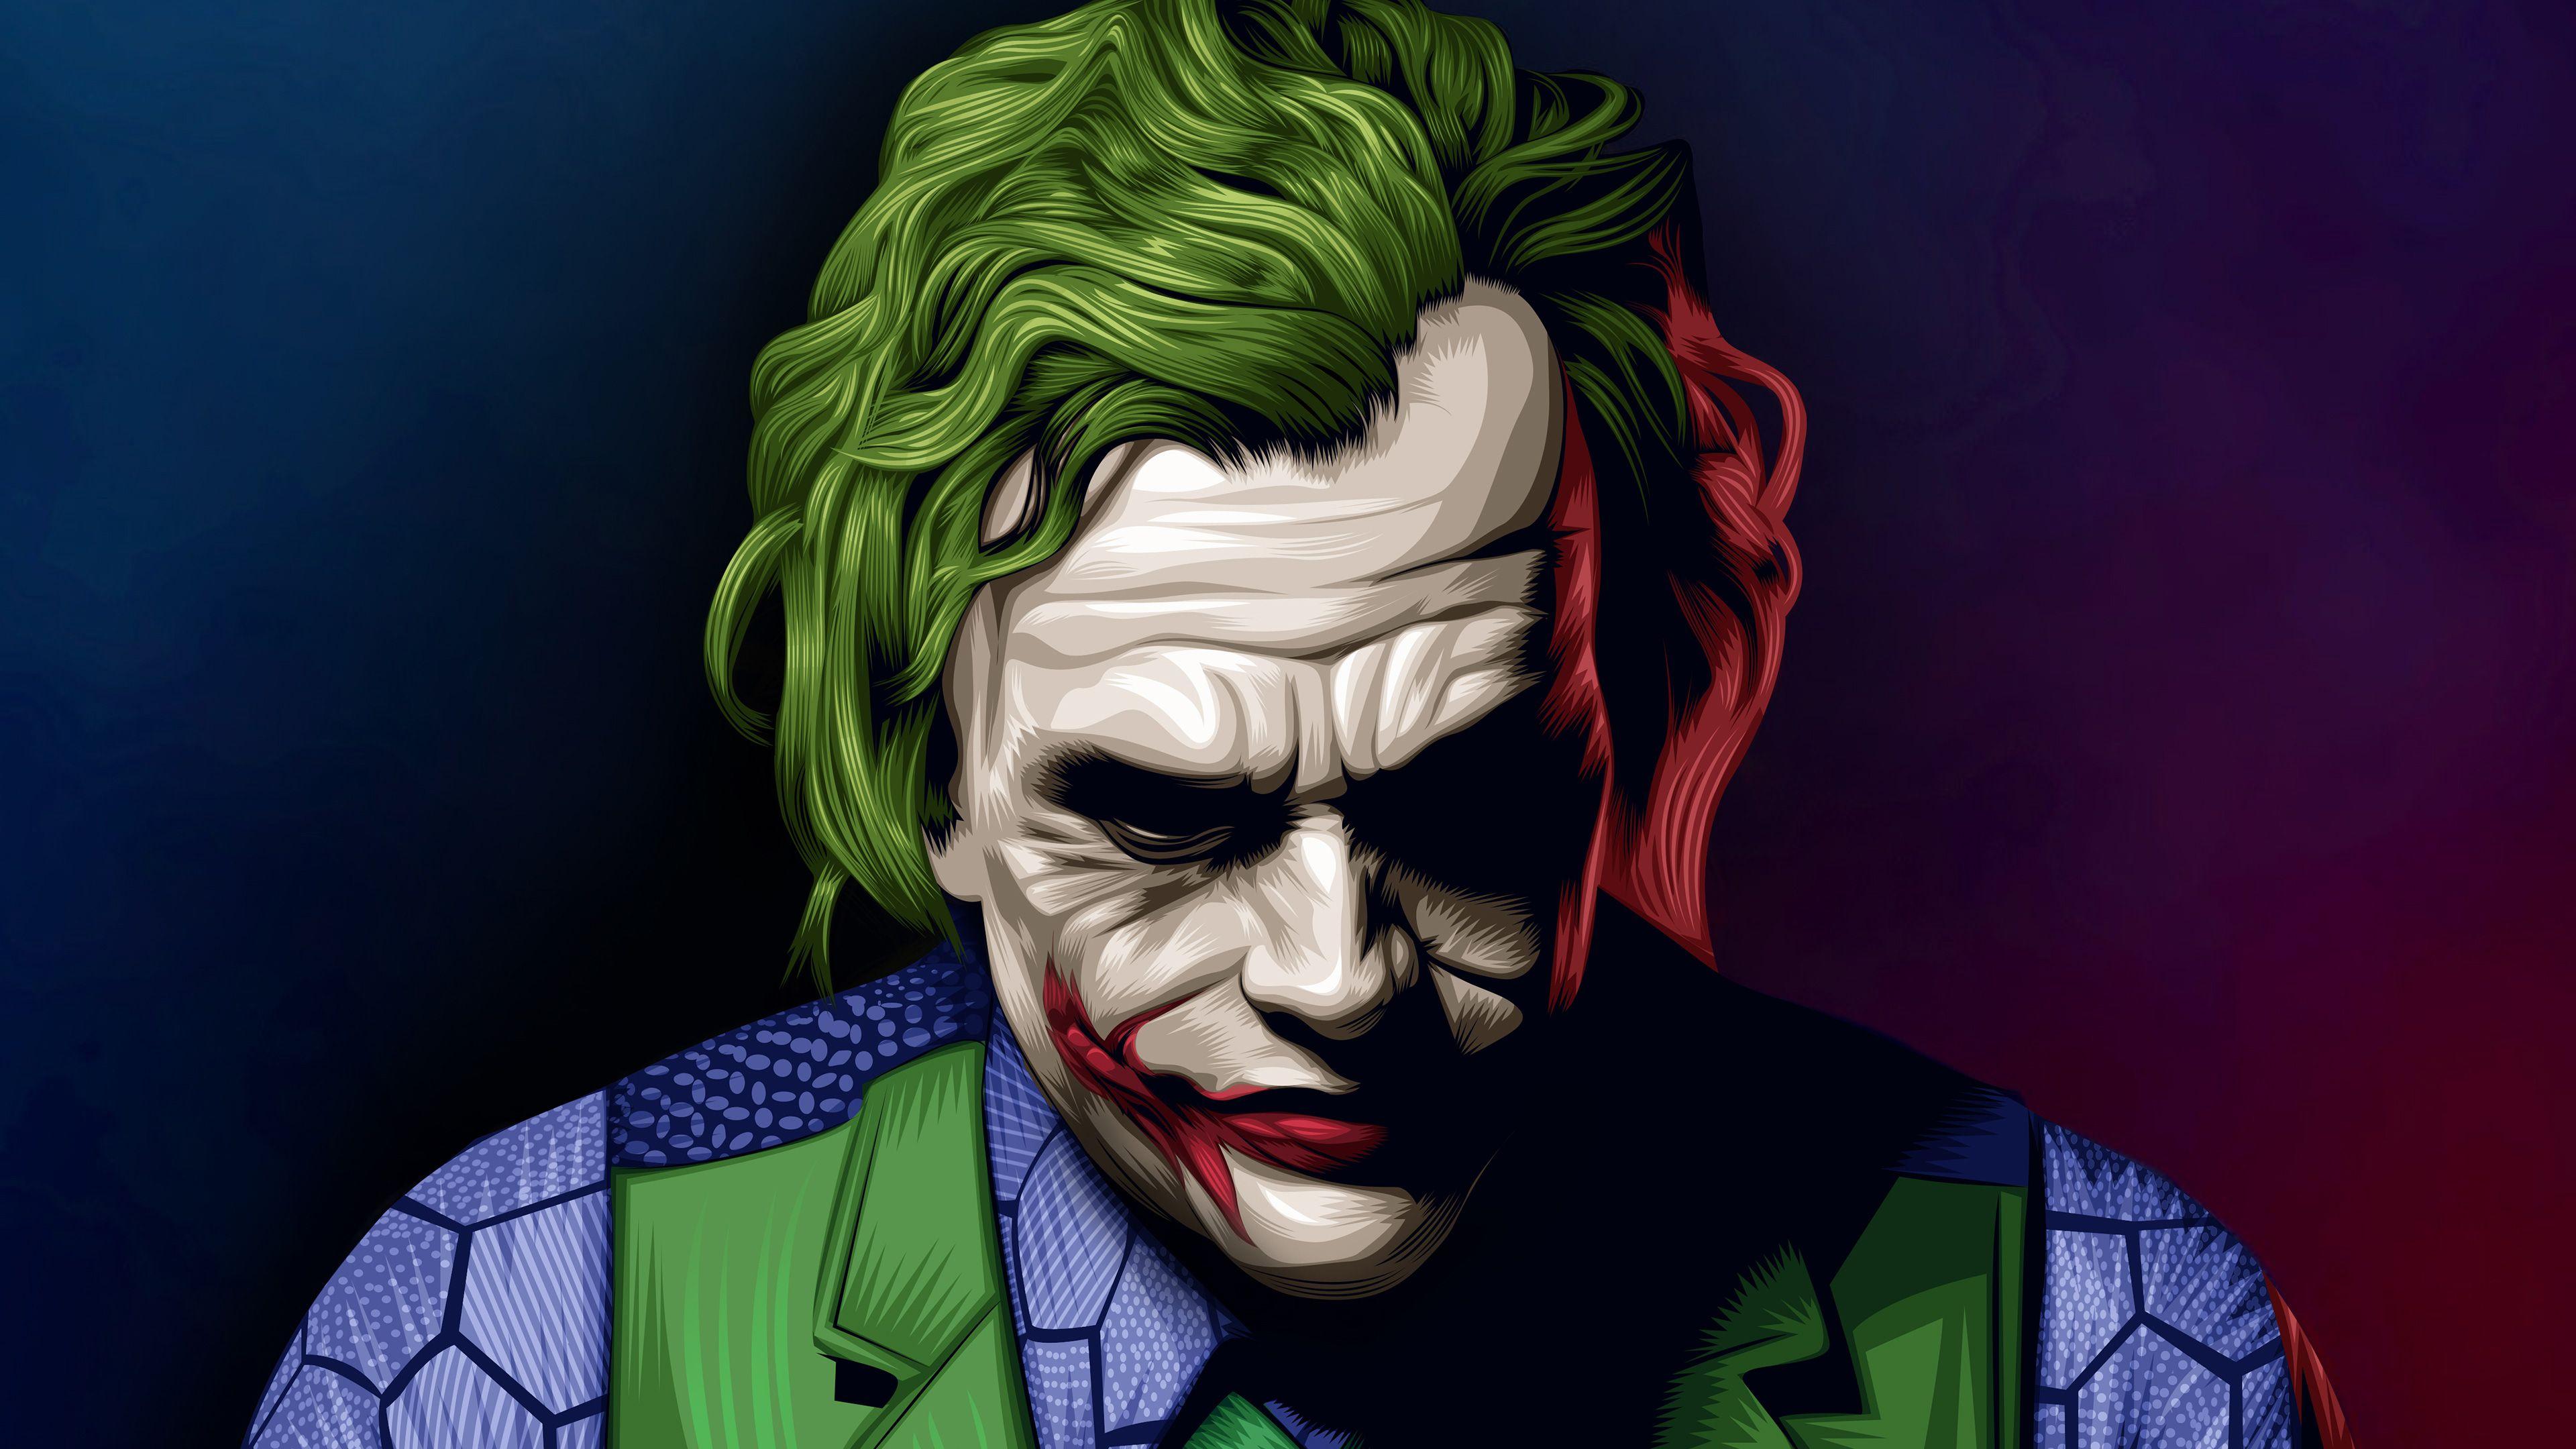 Joker Heath Ledger Illustration, HD Superheroes, 4k Wallpaper